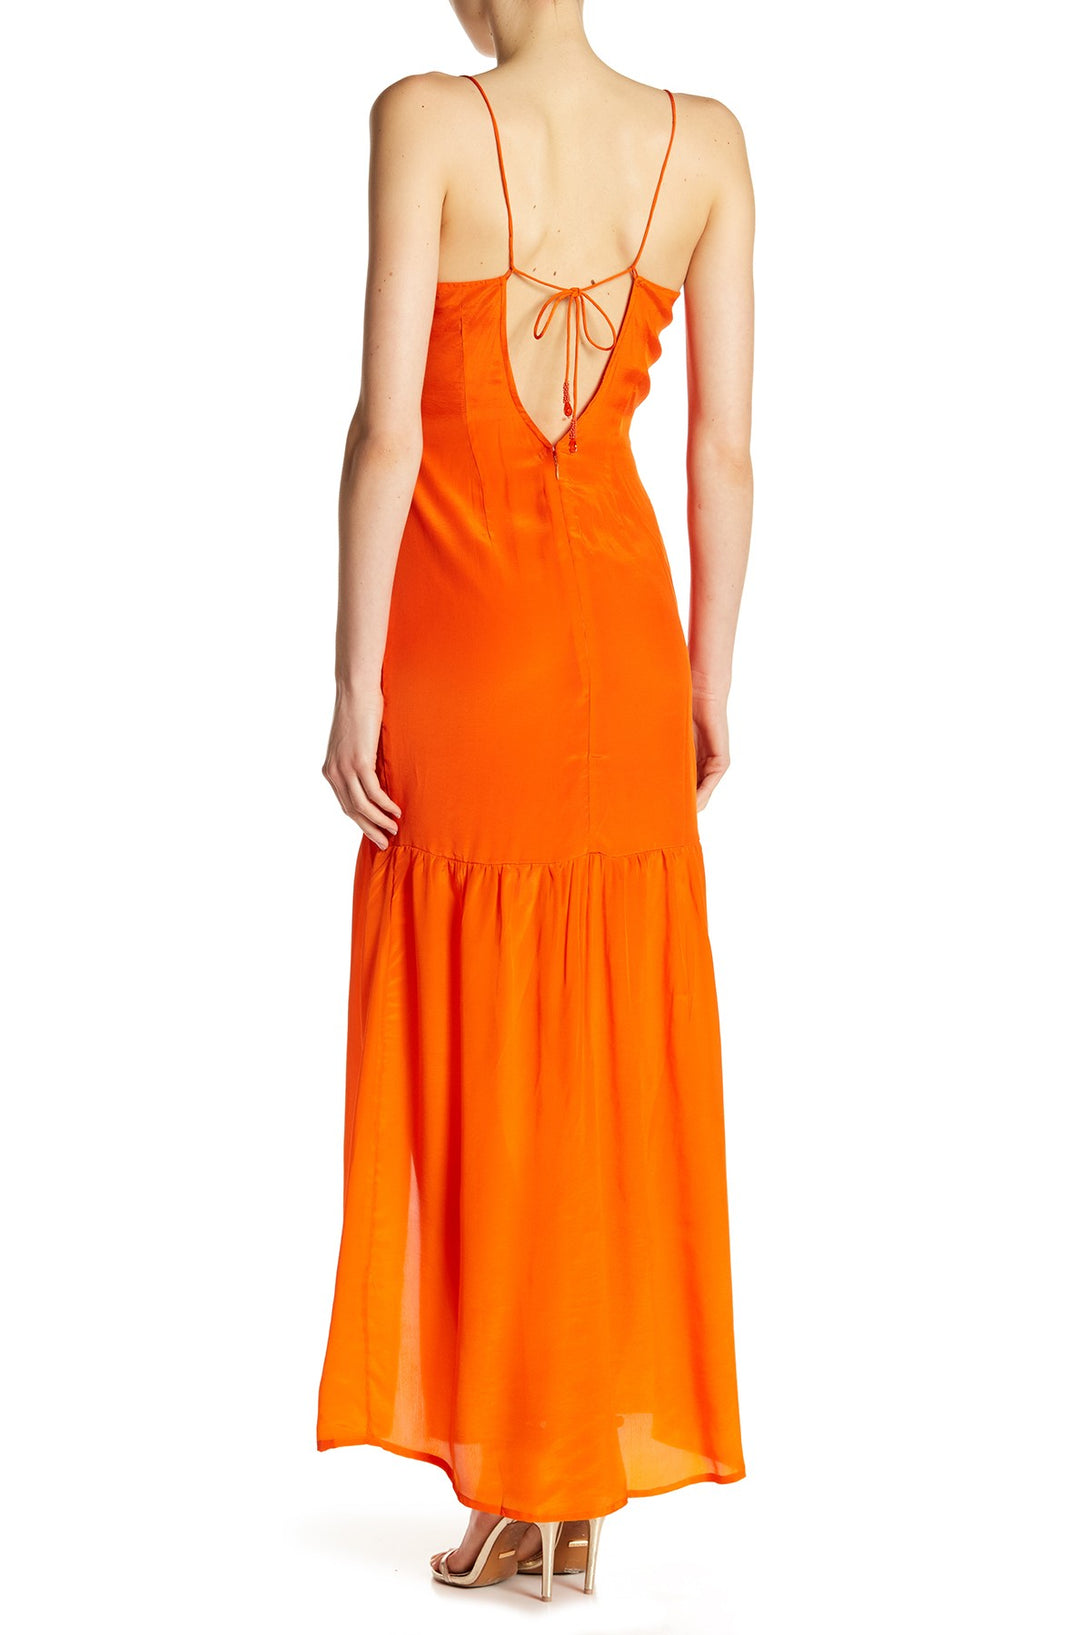  long formal orange dress, long summer dresses for women, Shahida Parides, backless maxi dress,